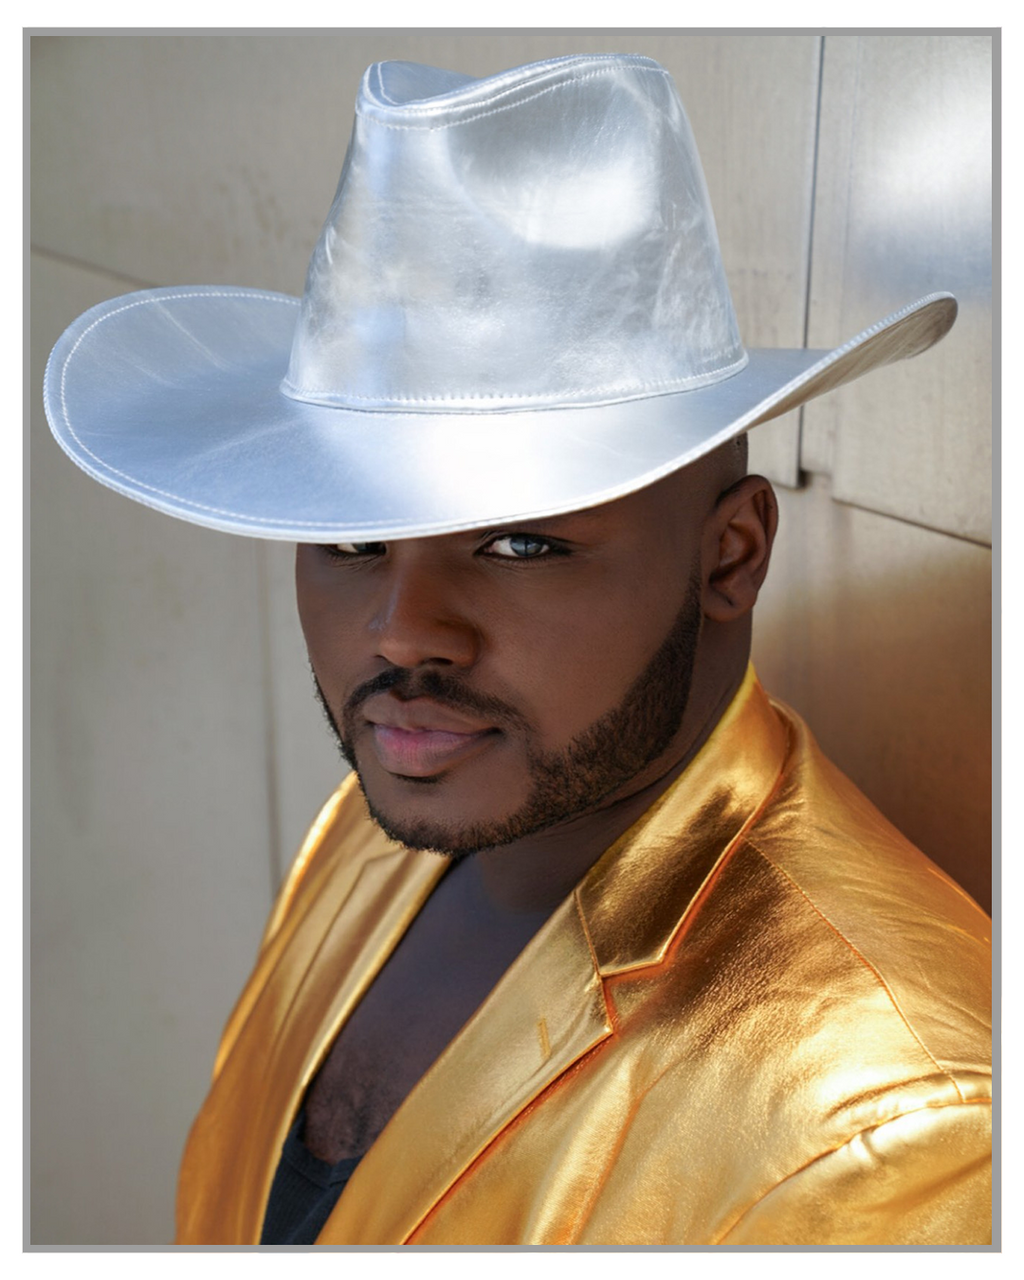 Metallic Silver Wide brim Cowboy Hat